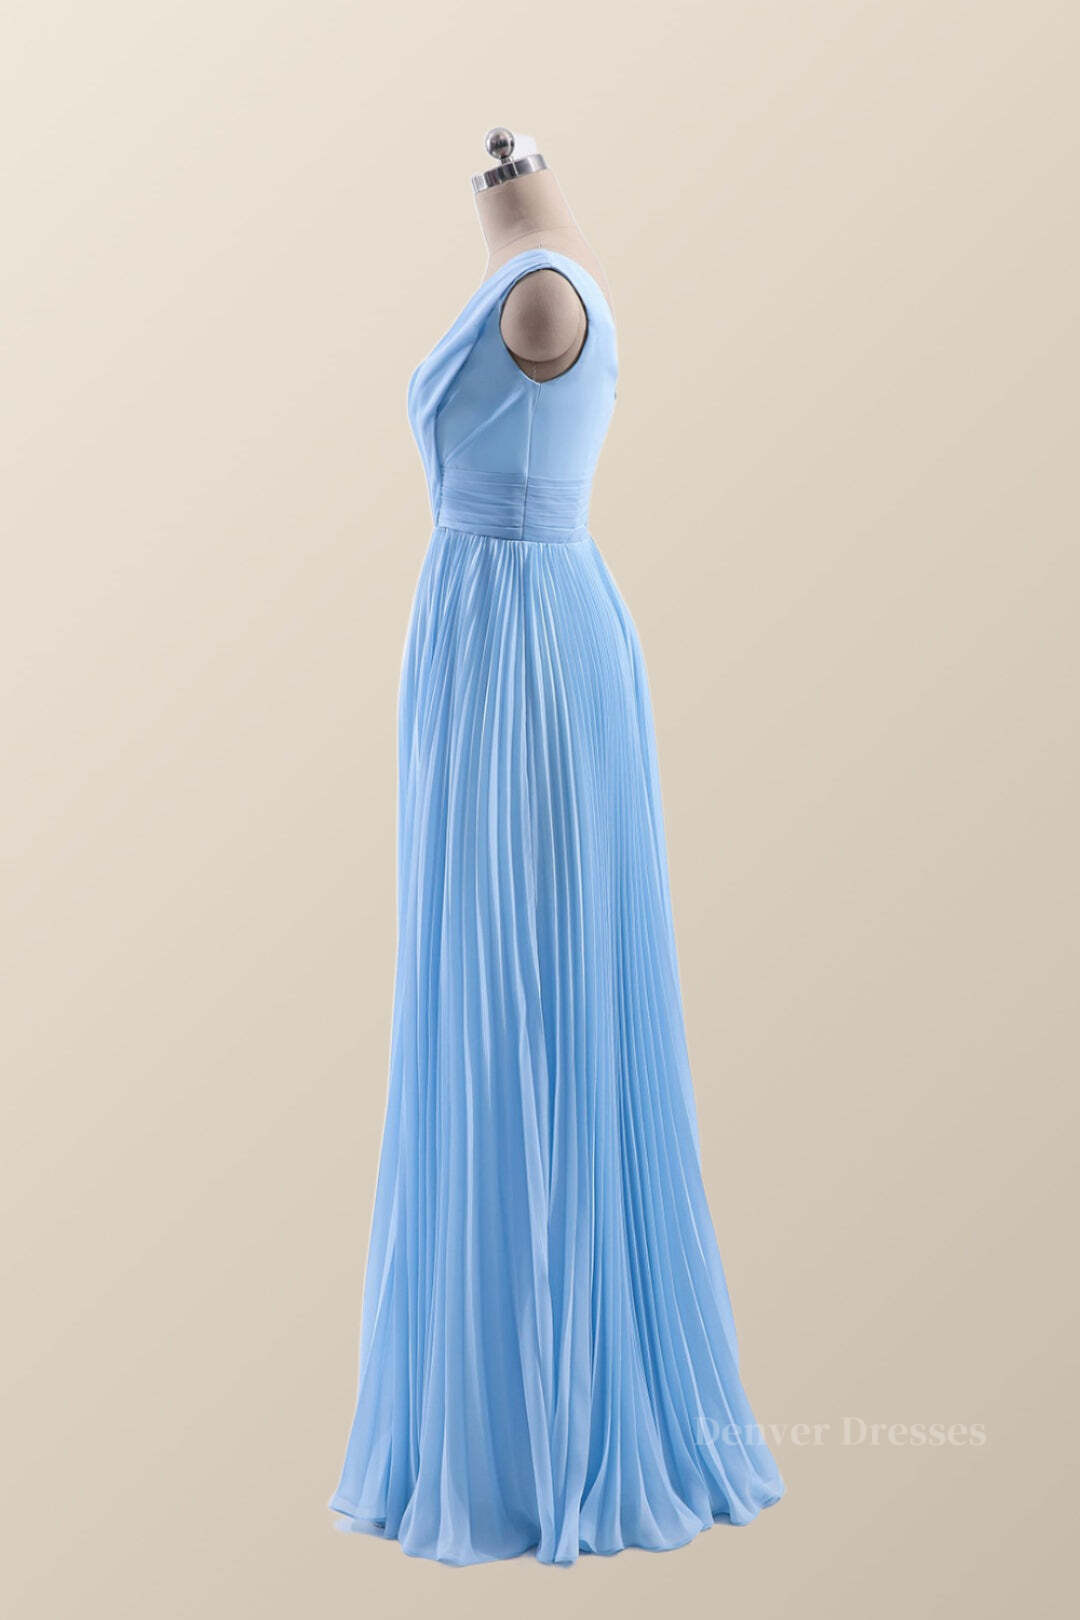 Homecoming Dress Short, V Neck Blue Chiffon A-line Long Bridesmaid Dress